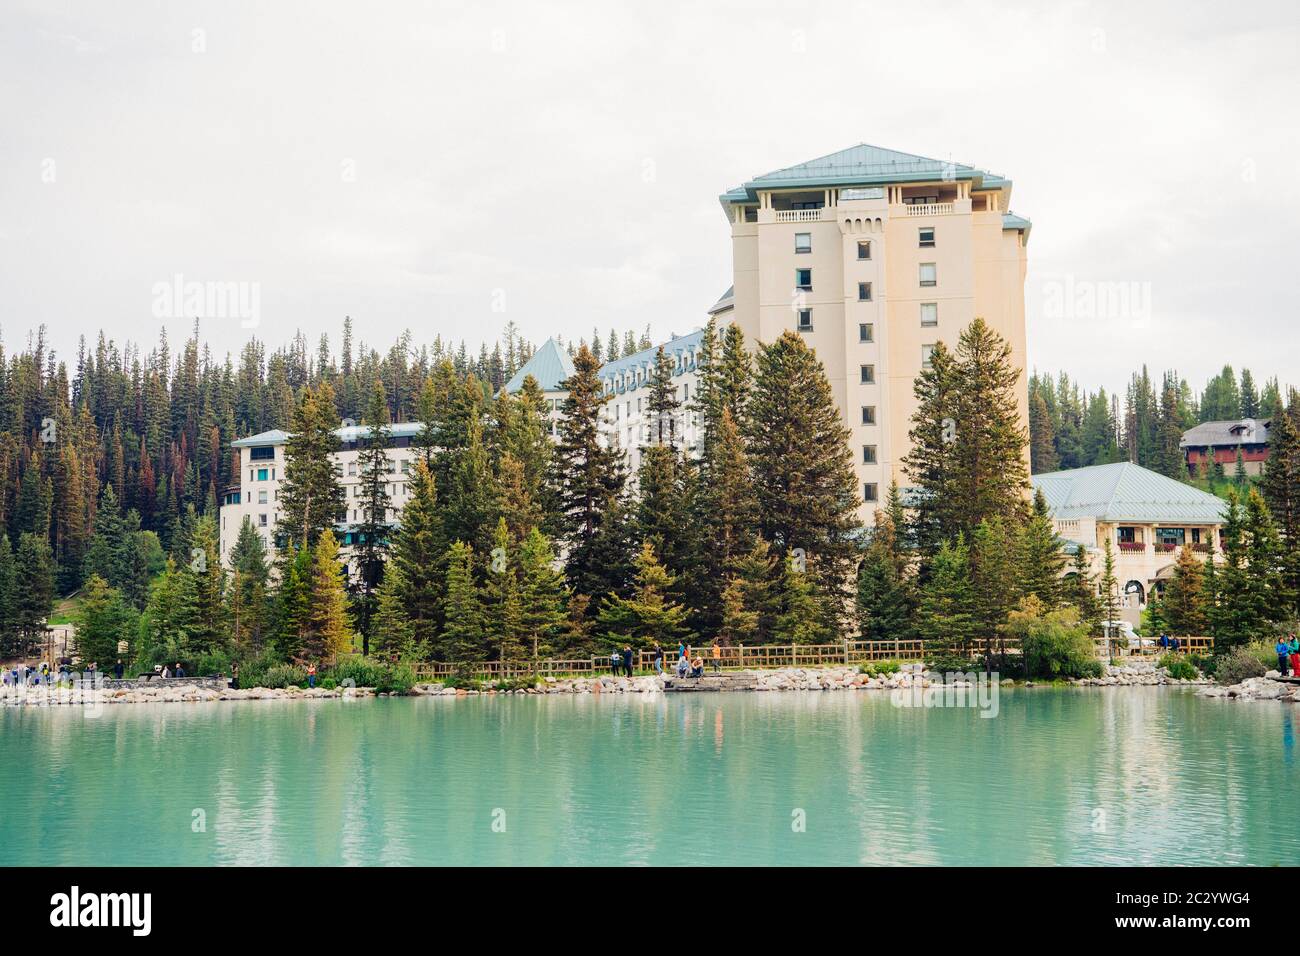 Isolated tourist resort next to calm lake, Banff, Alberta, Canada Stock Photo